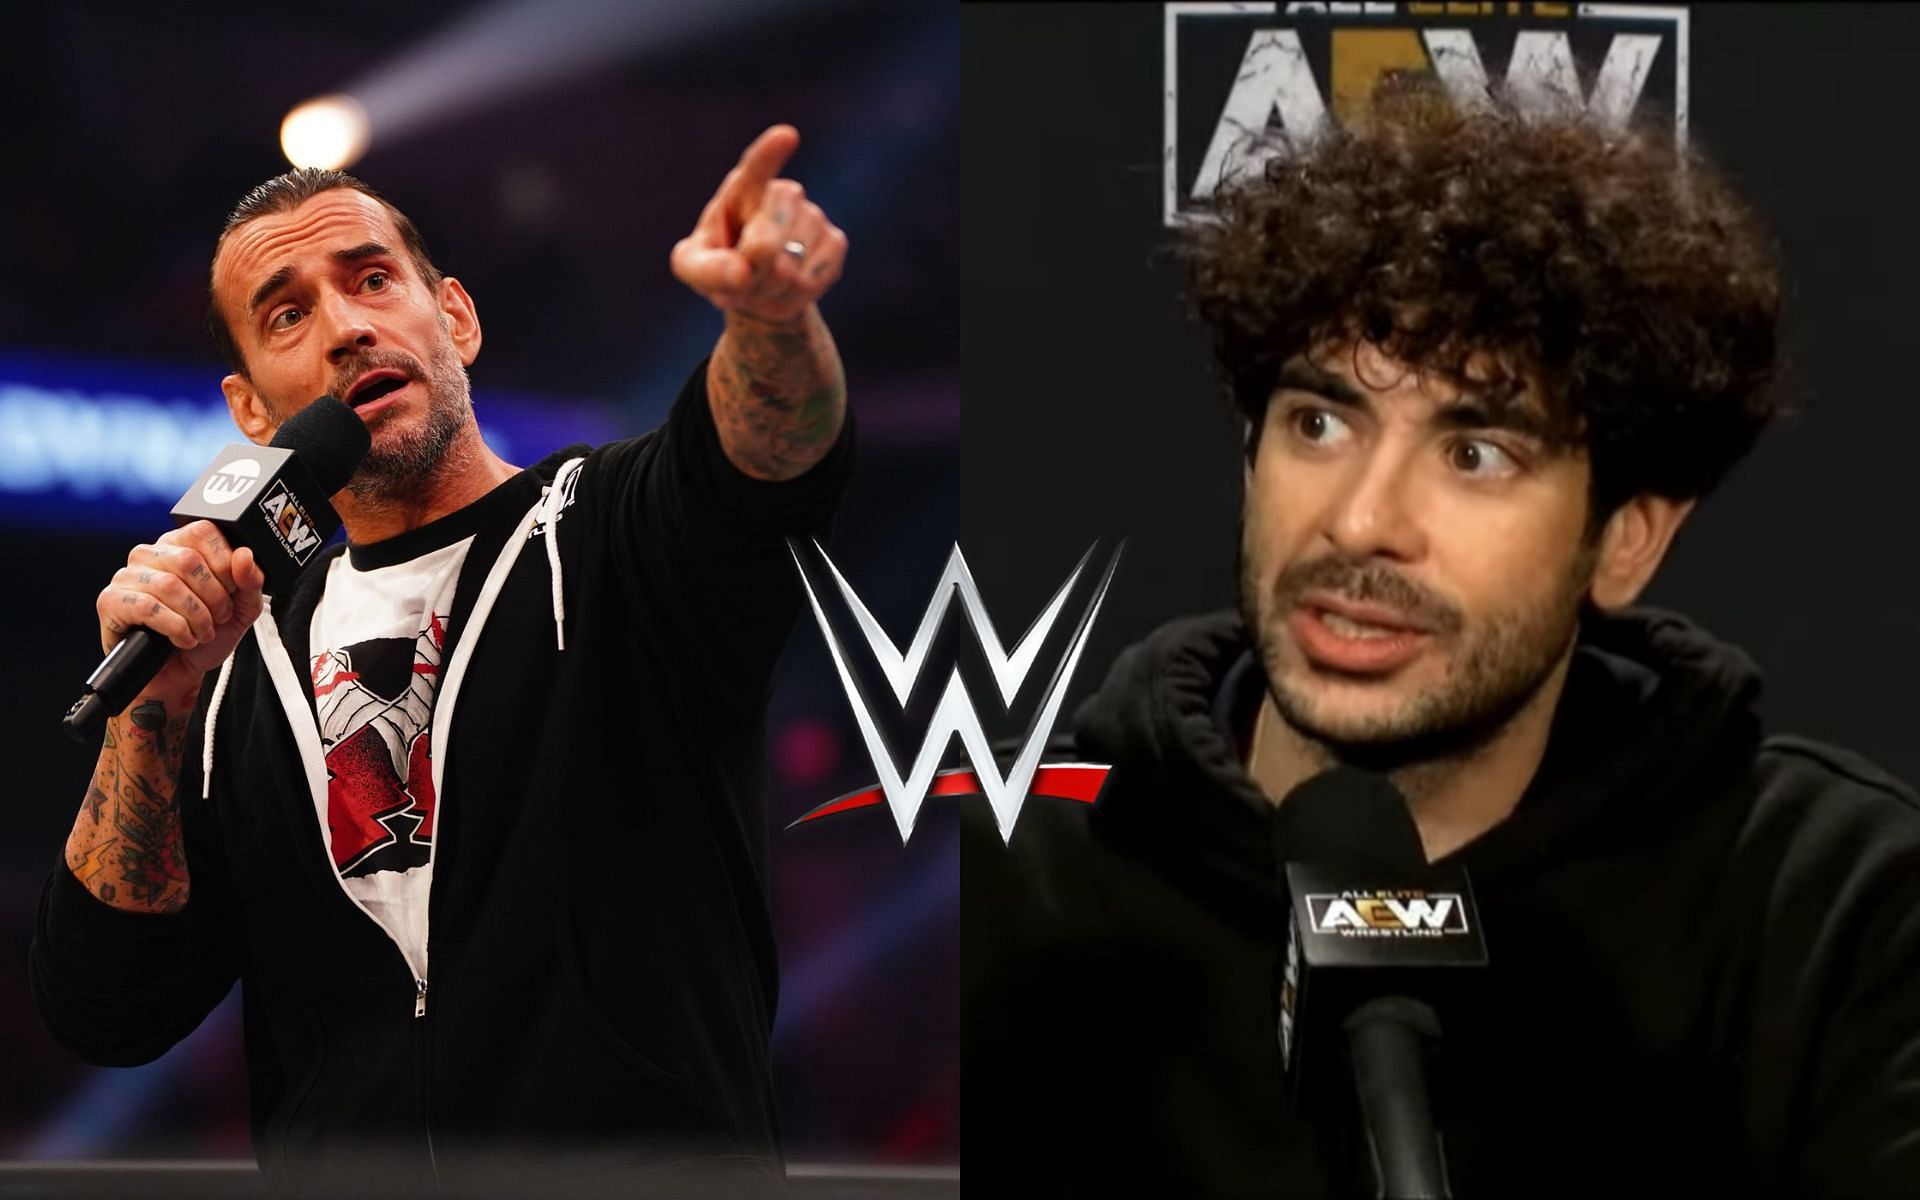 A former WWE personality thinks CM Punk disrespected AEW President Tony Khan.